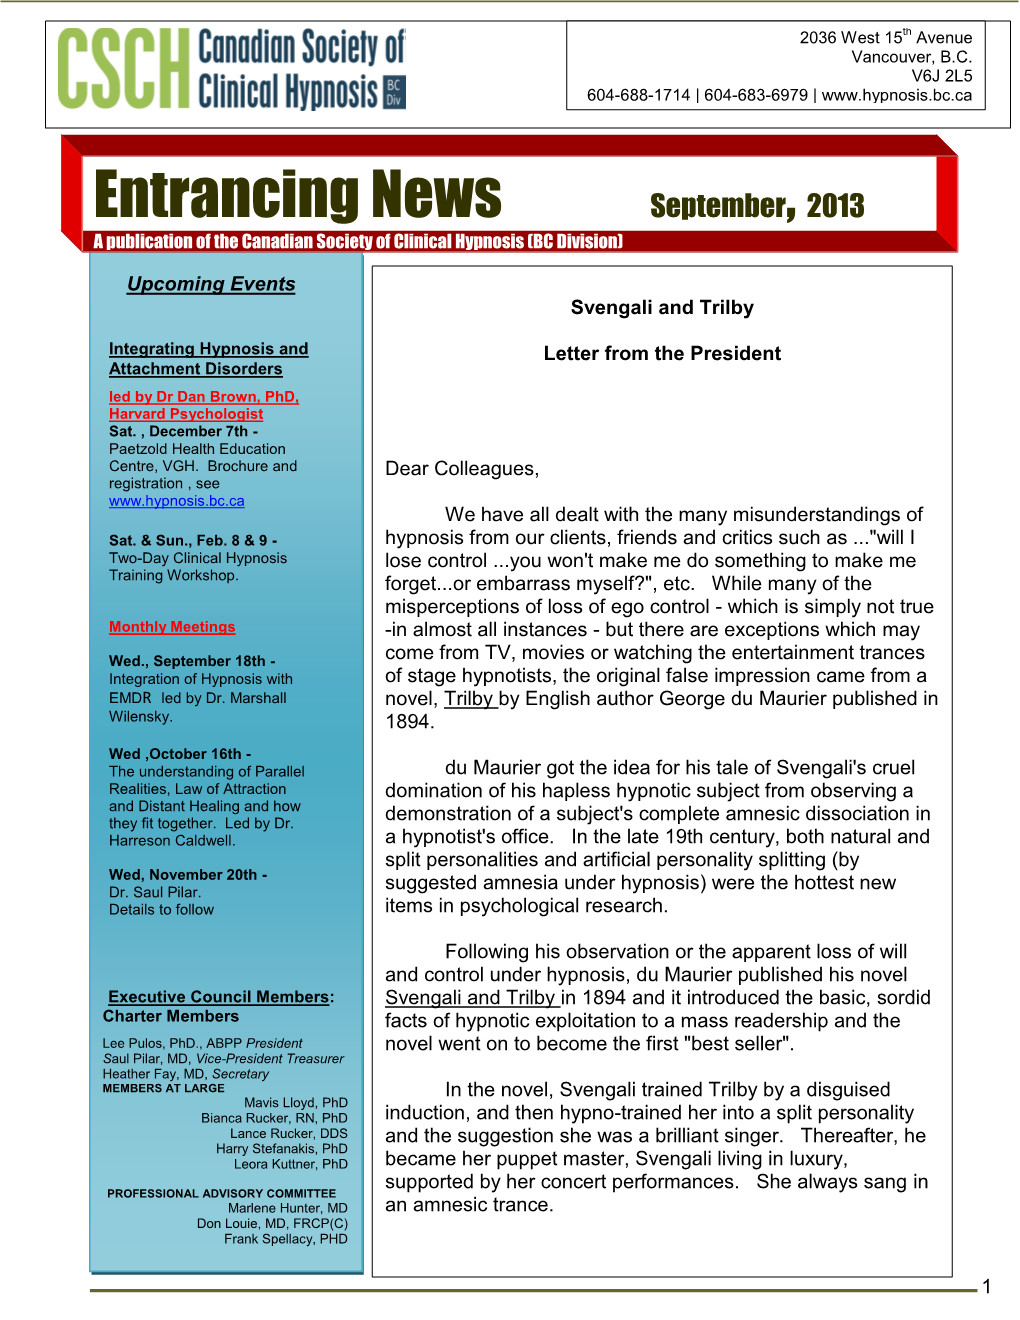 Entrancing News September, 2013